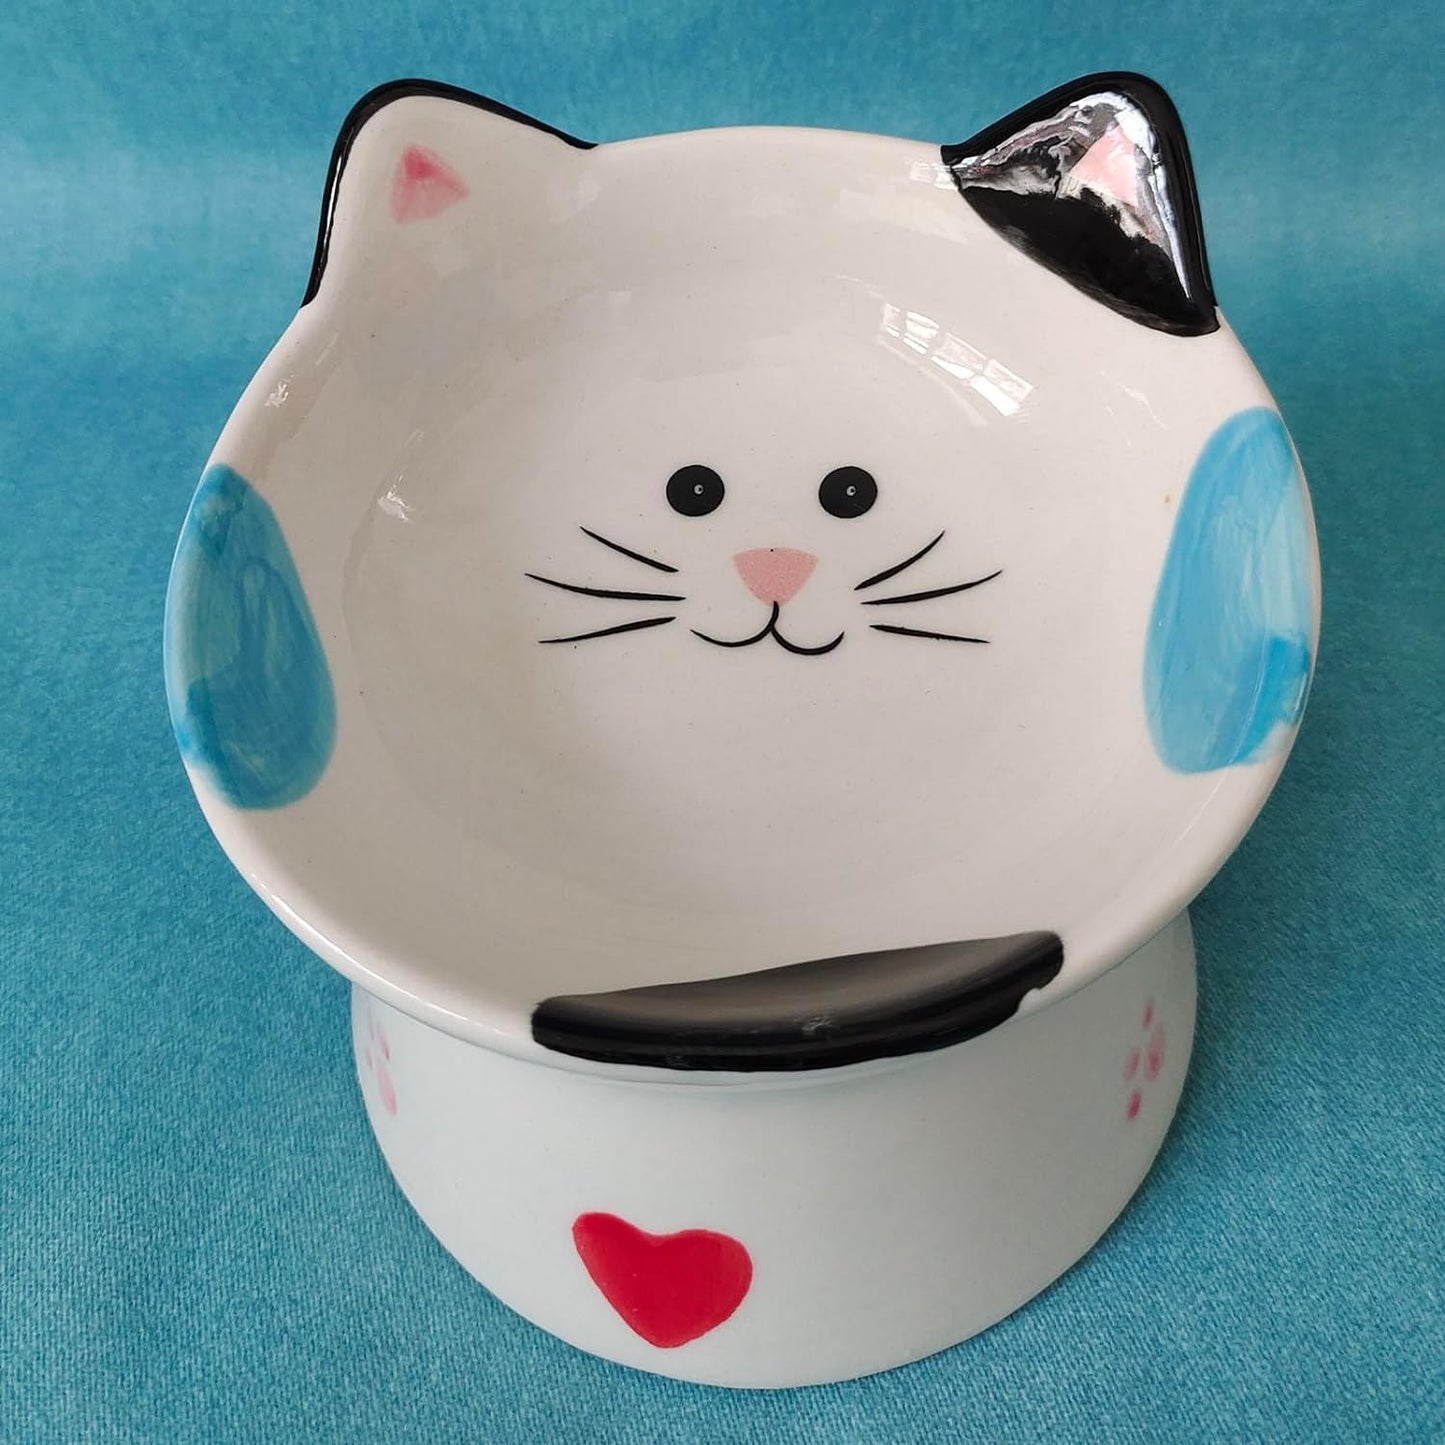 Purr-fect Posture: Raised Ceramic Cat Bowl for Happy Meals